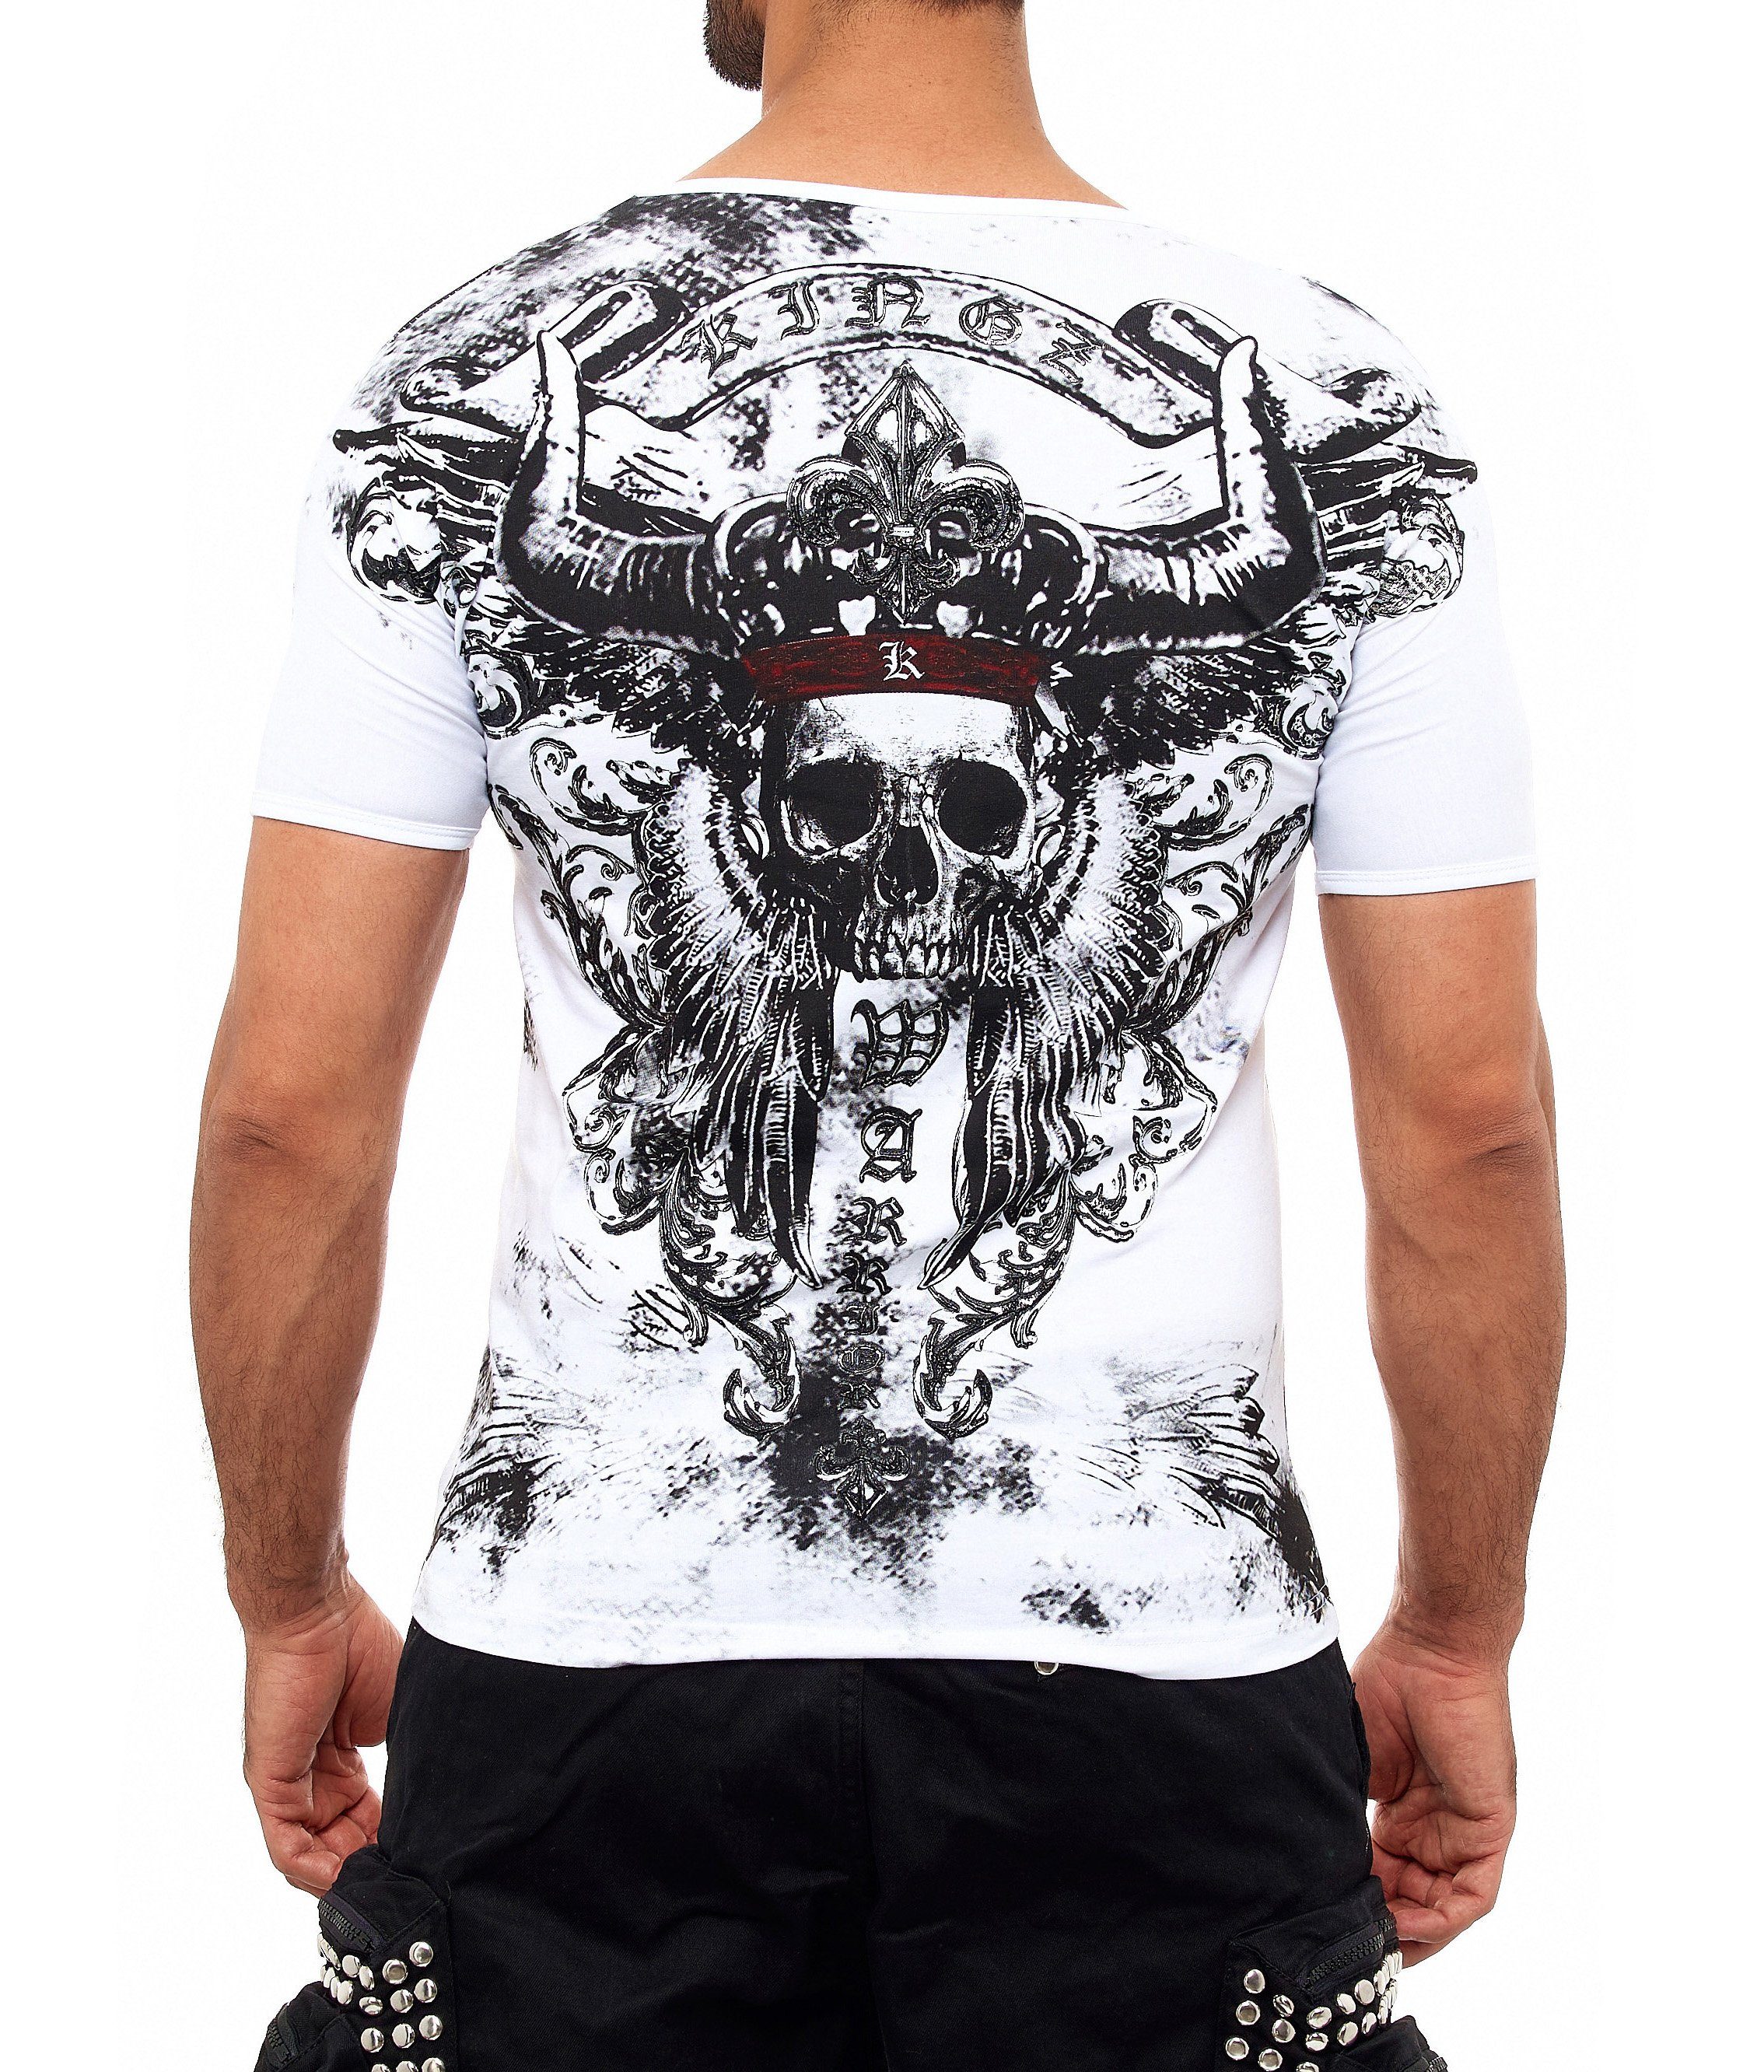 Herren Shirts KINGZ T-Shirt mit stylischem Wikinger-Totenkopf-Motiv